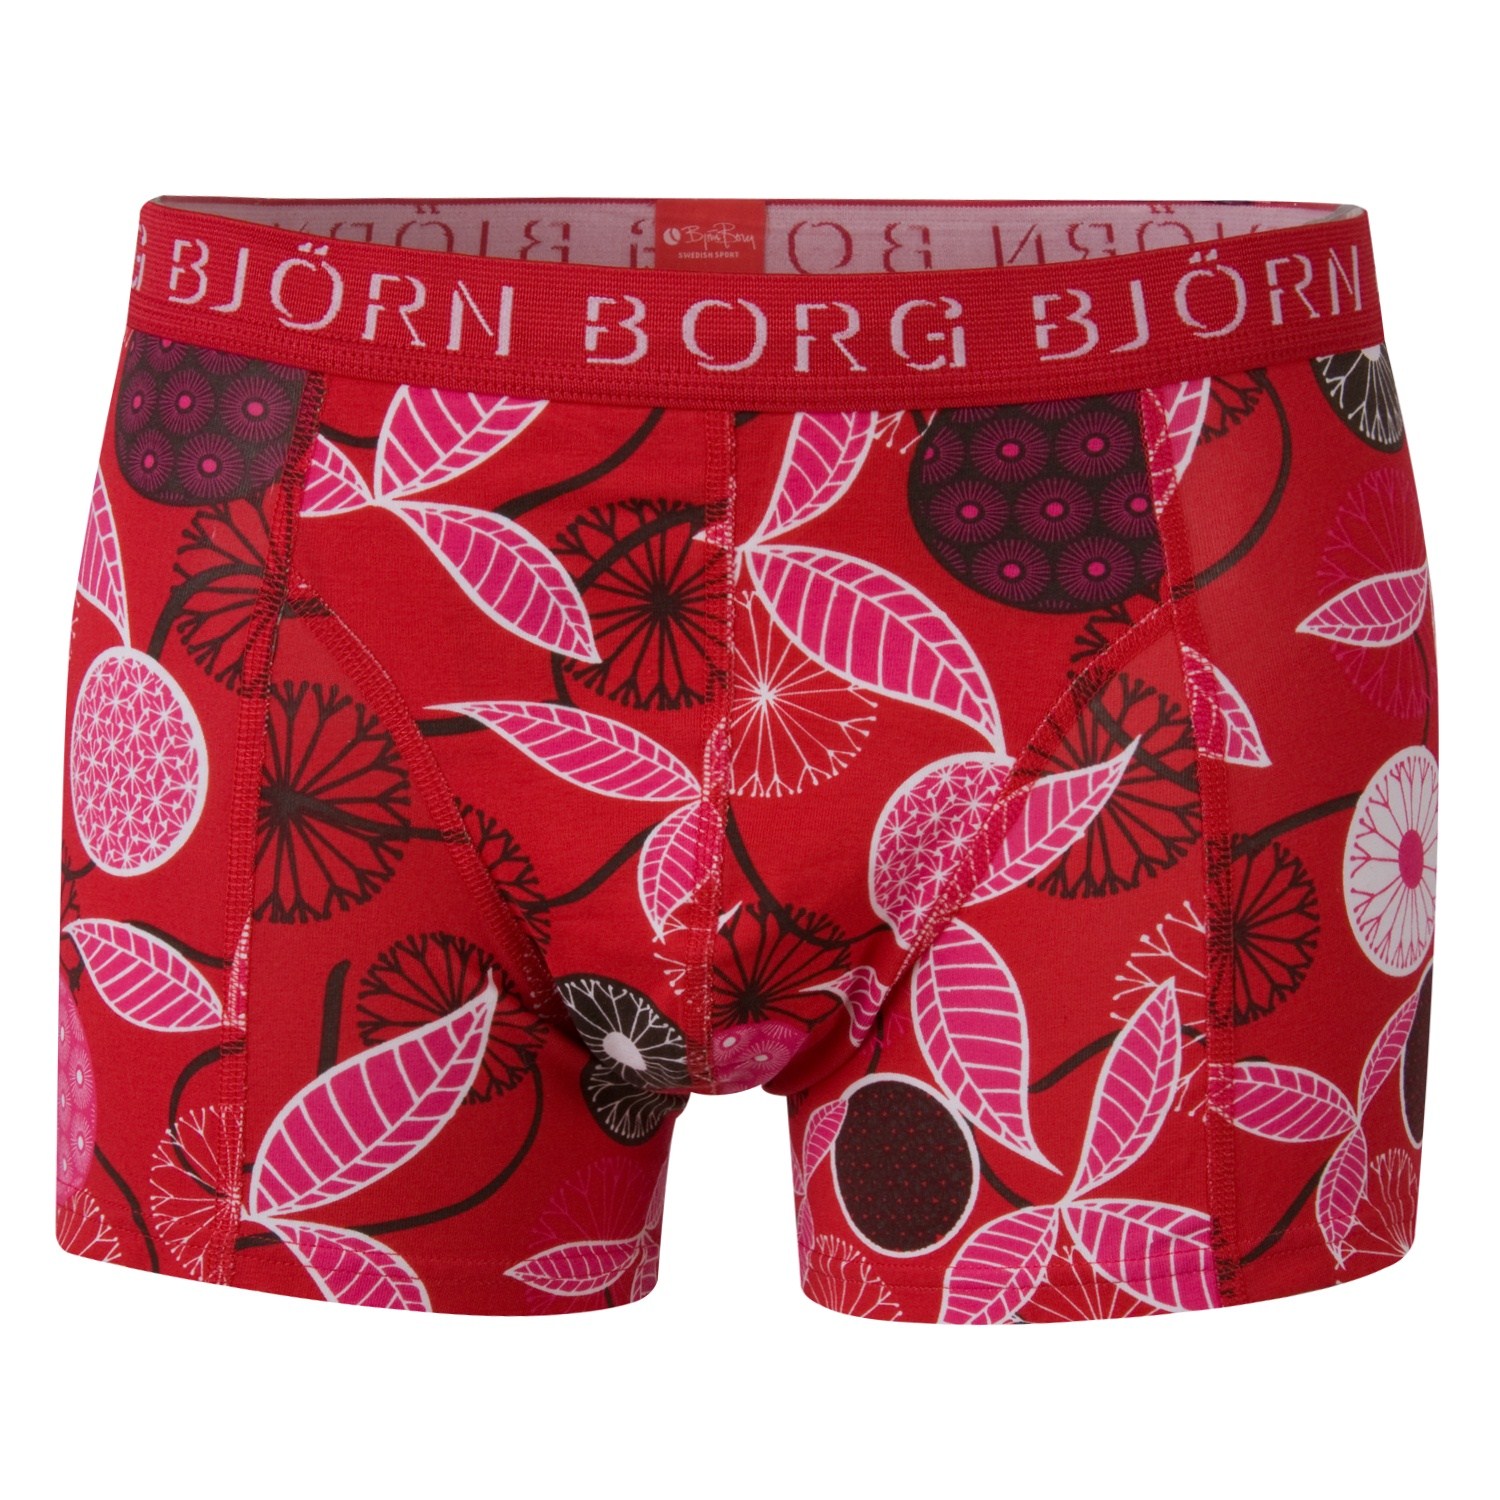 Björn Borg Short Shorts 2005-7838